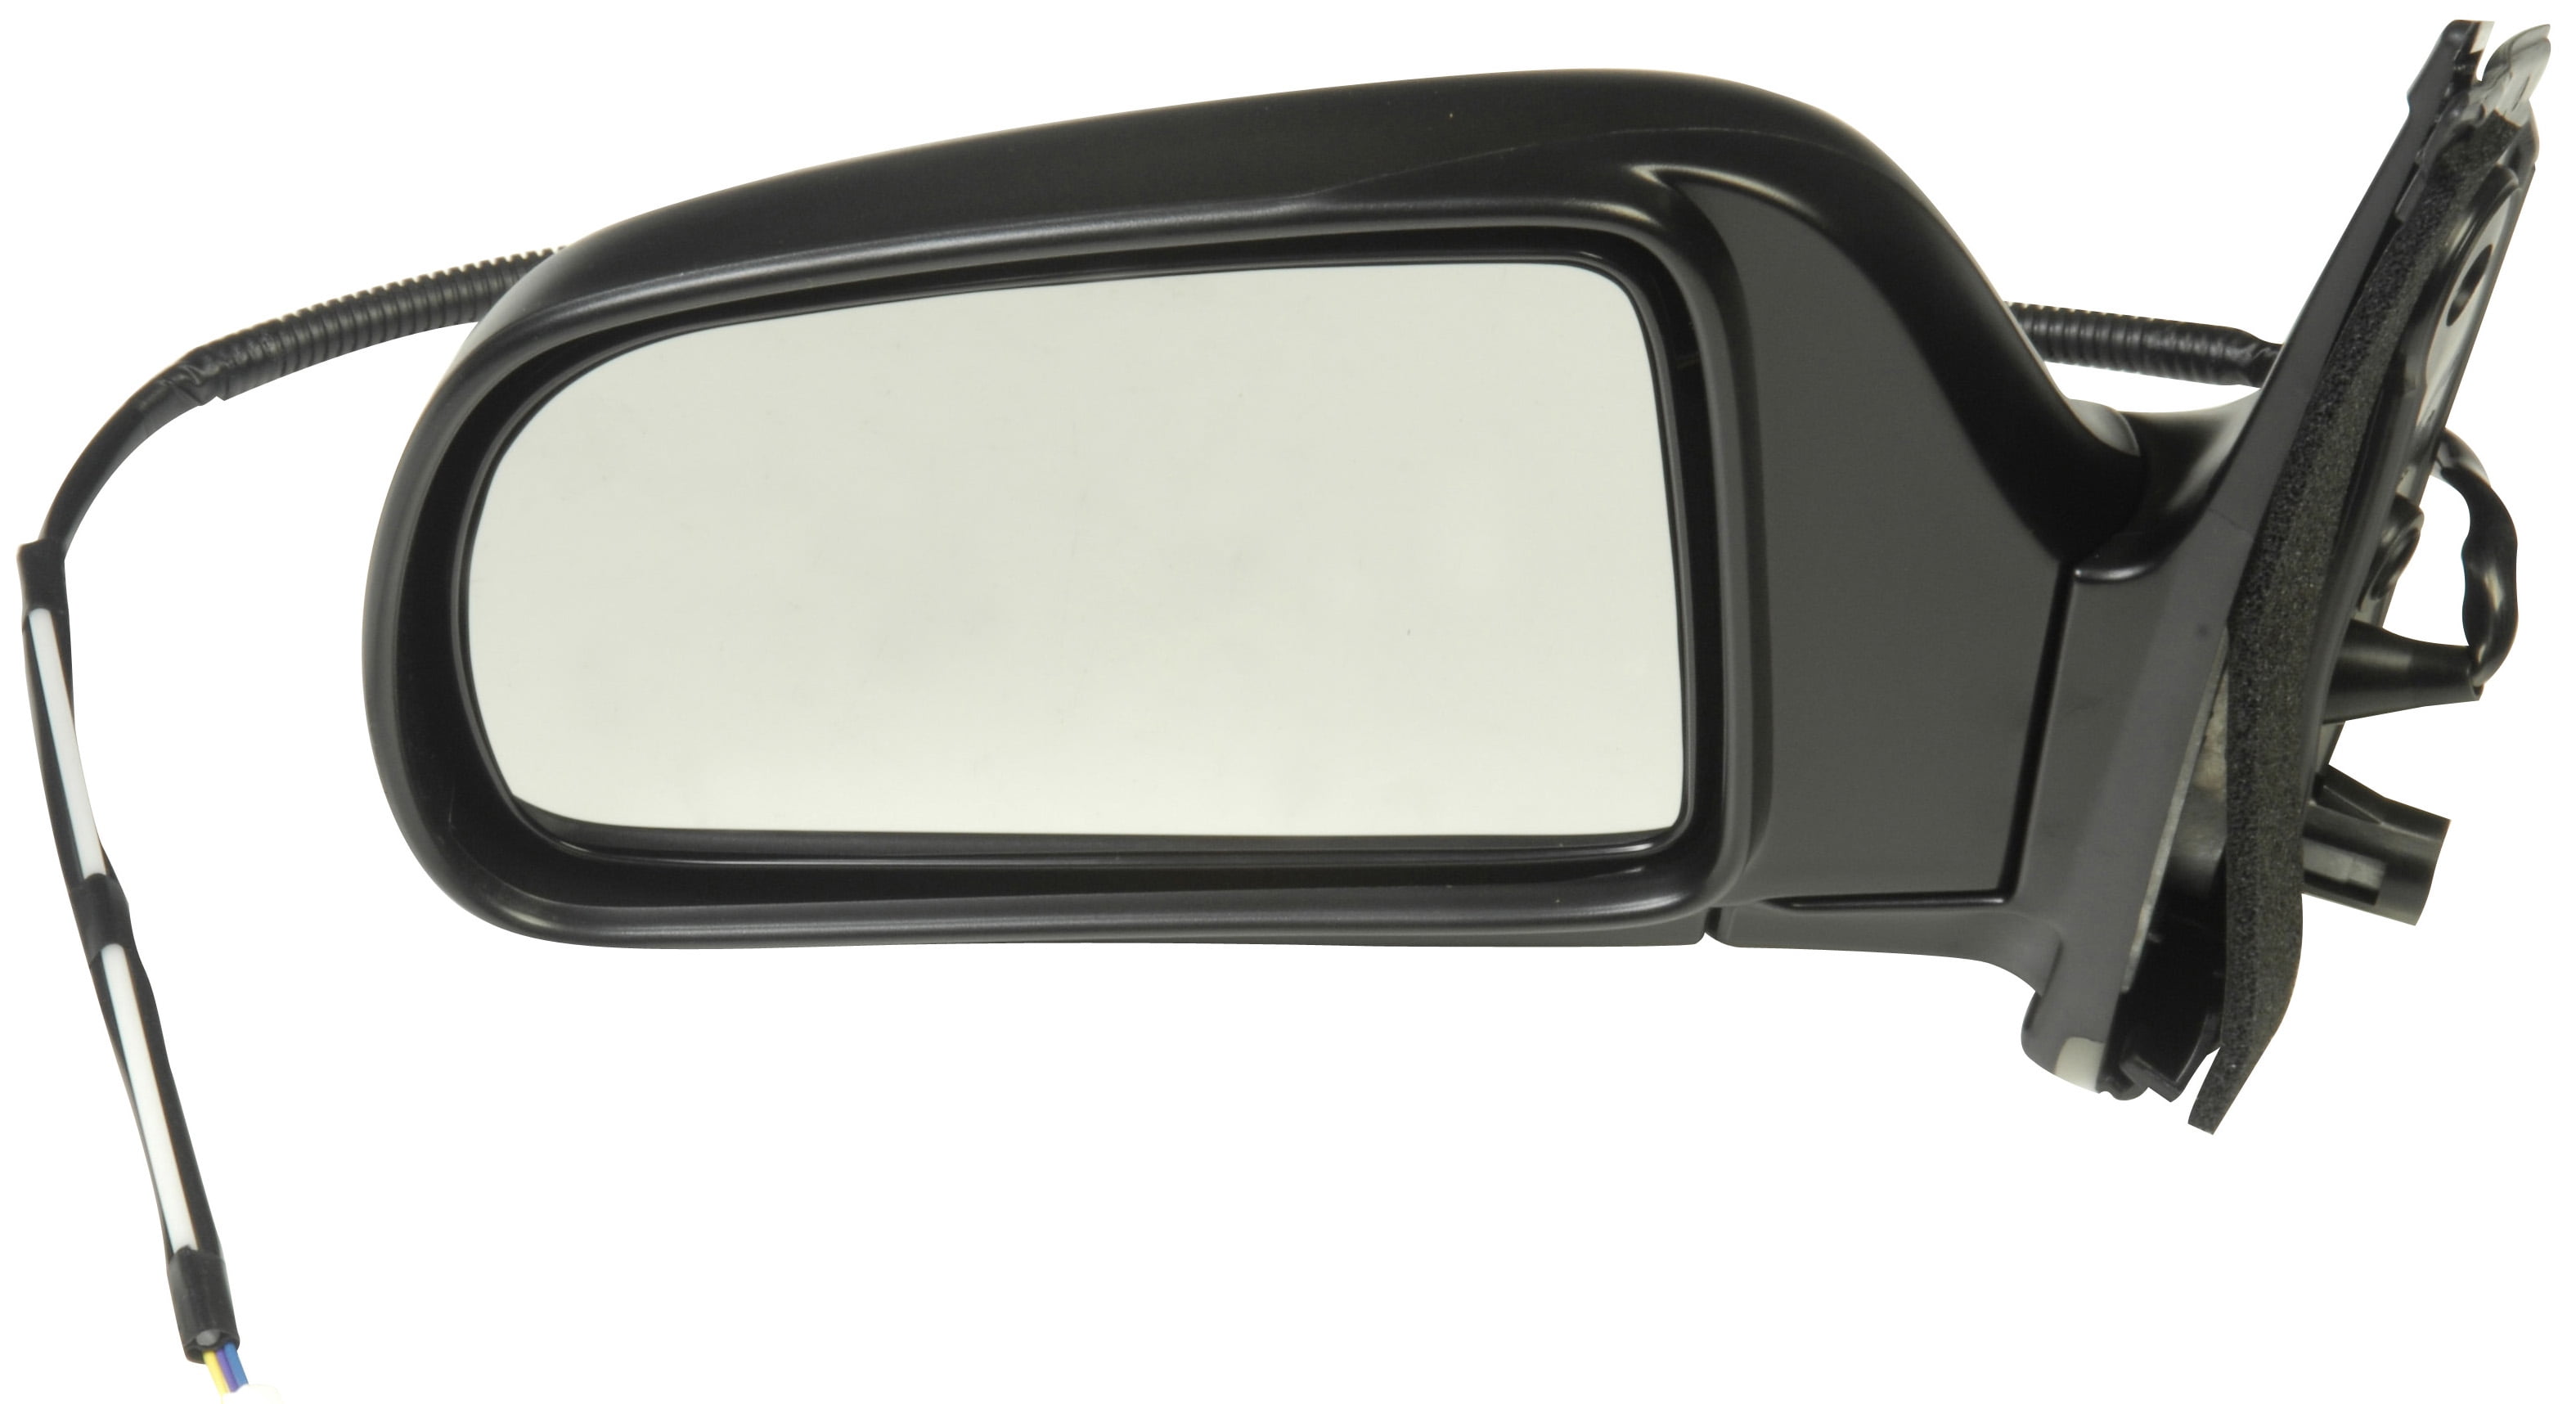 Dorman 955-1445 Driver Side Door Mirror for Select Toyota Models